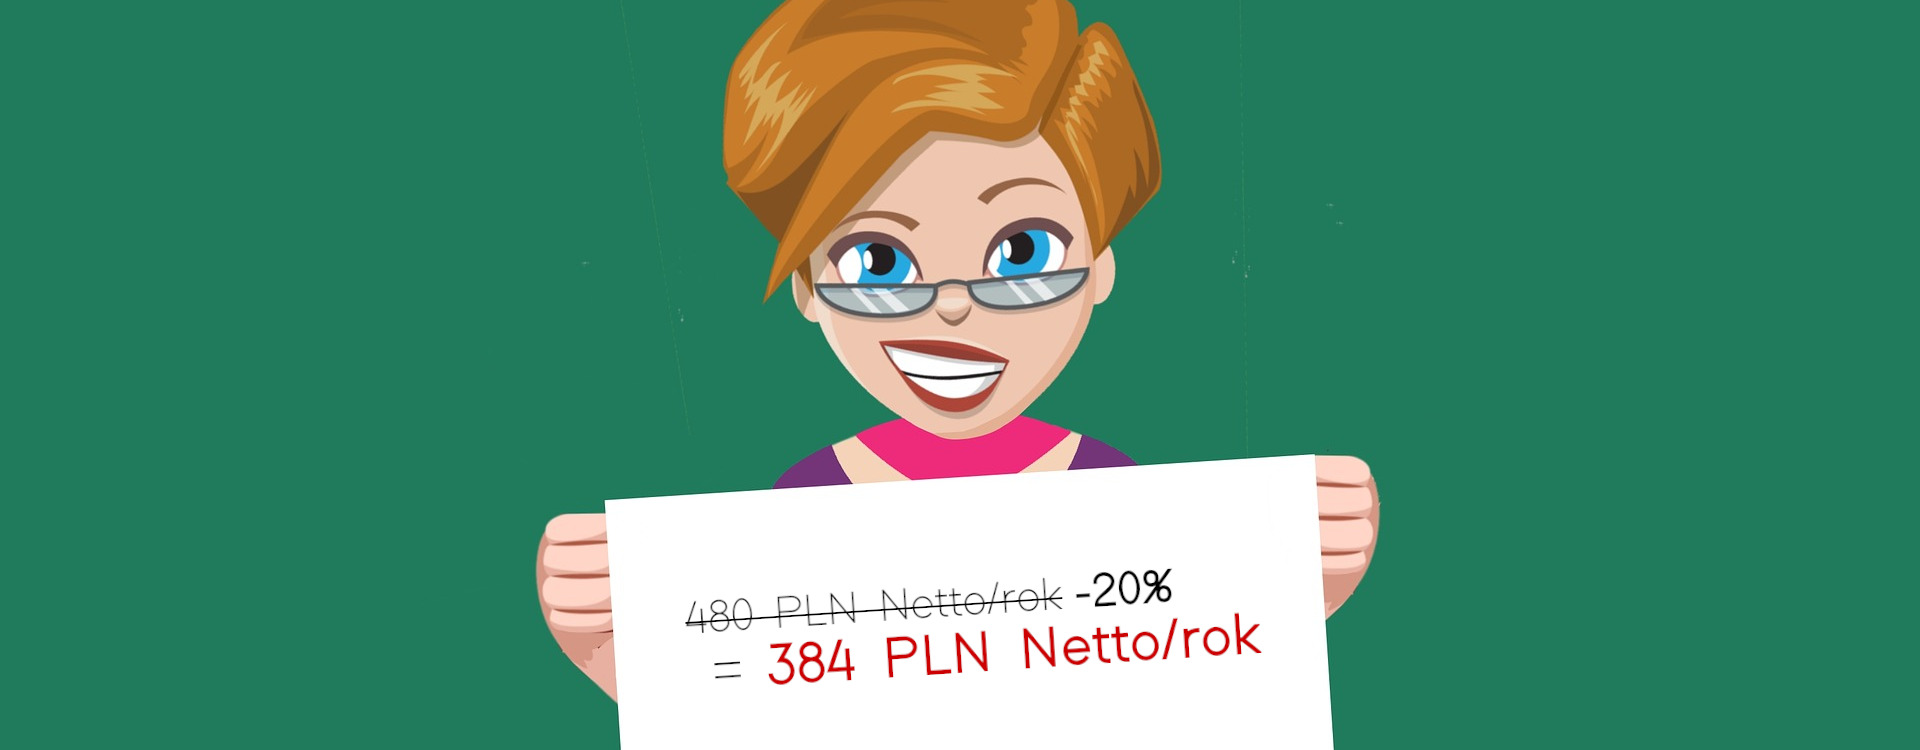 480 PLN Netto/rok -20% = tylko 384 PLN Netto/rok